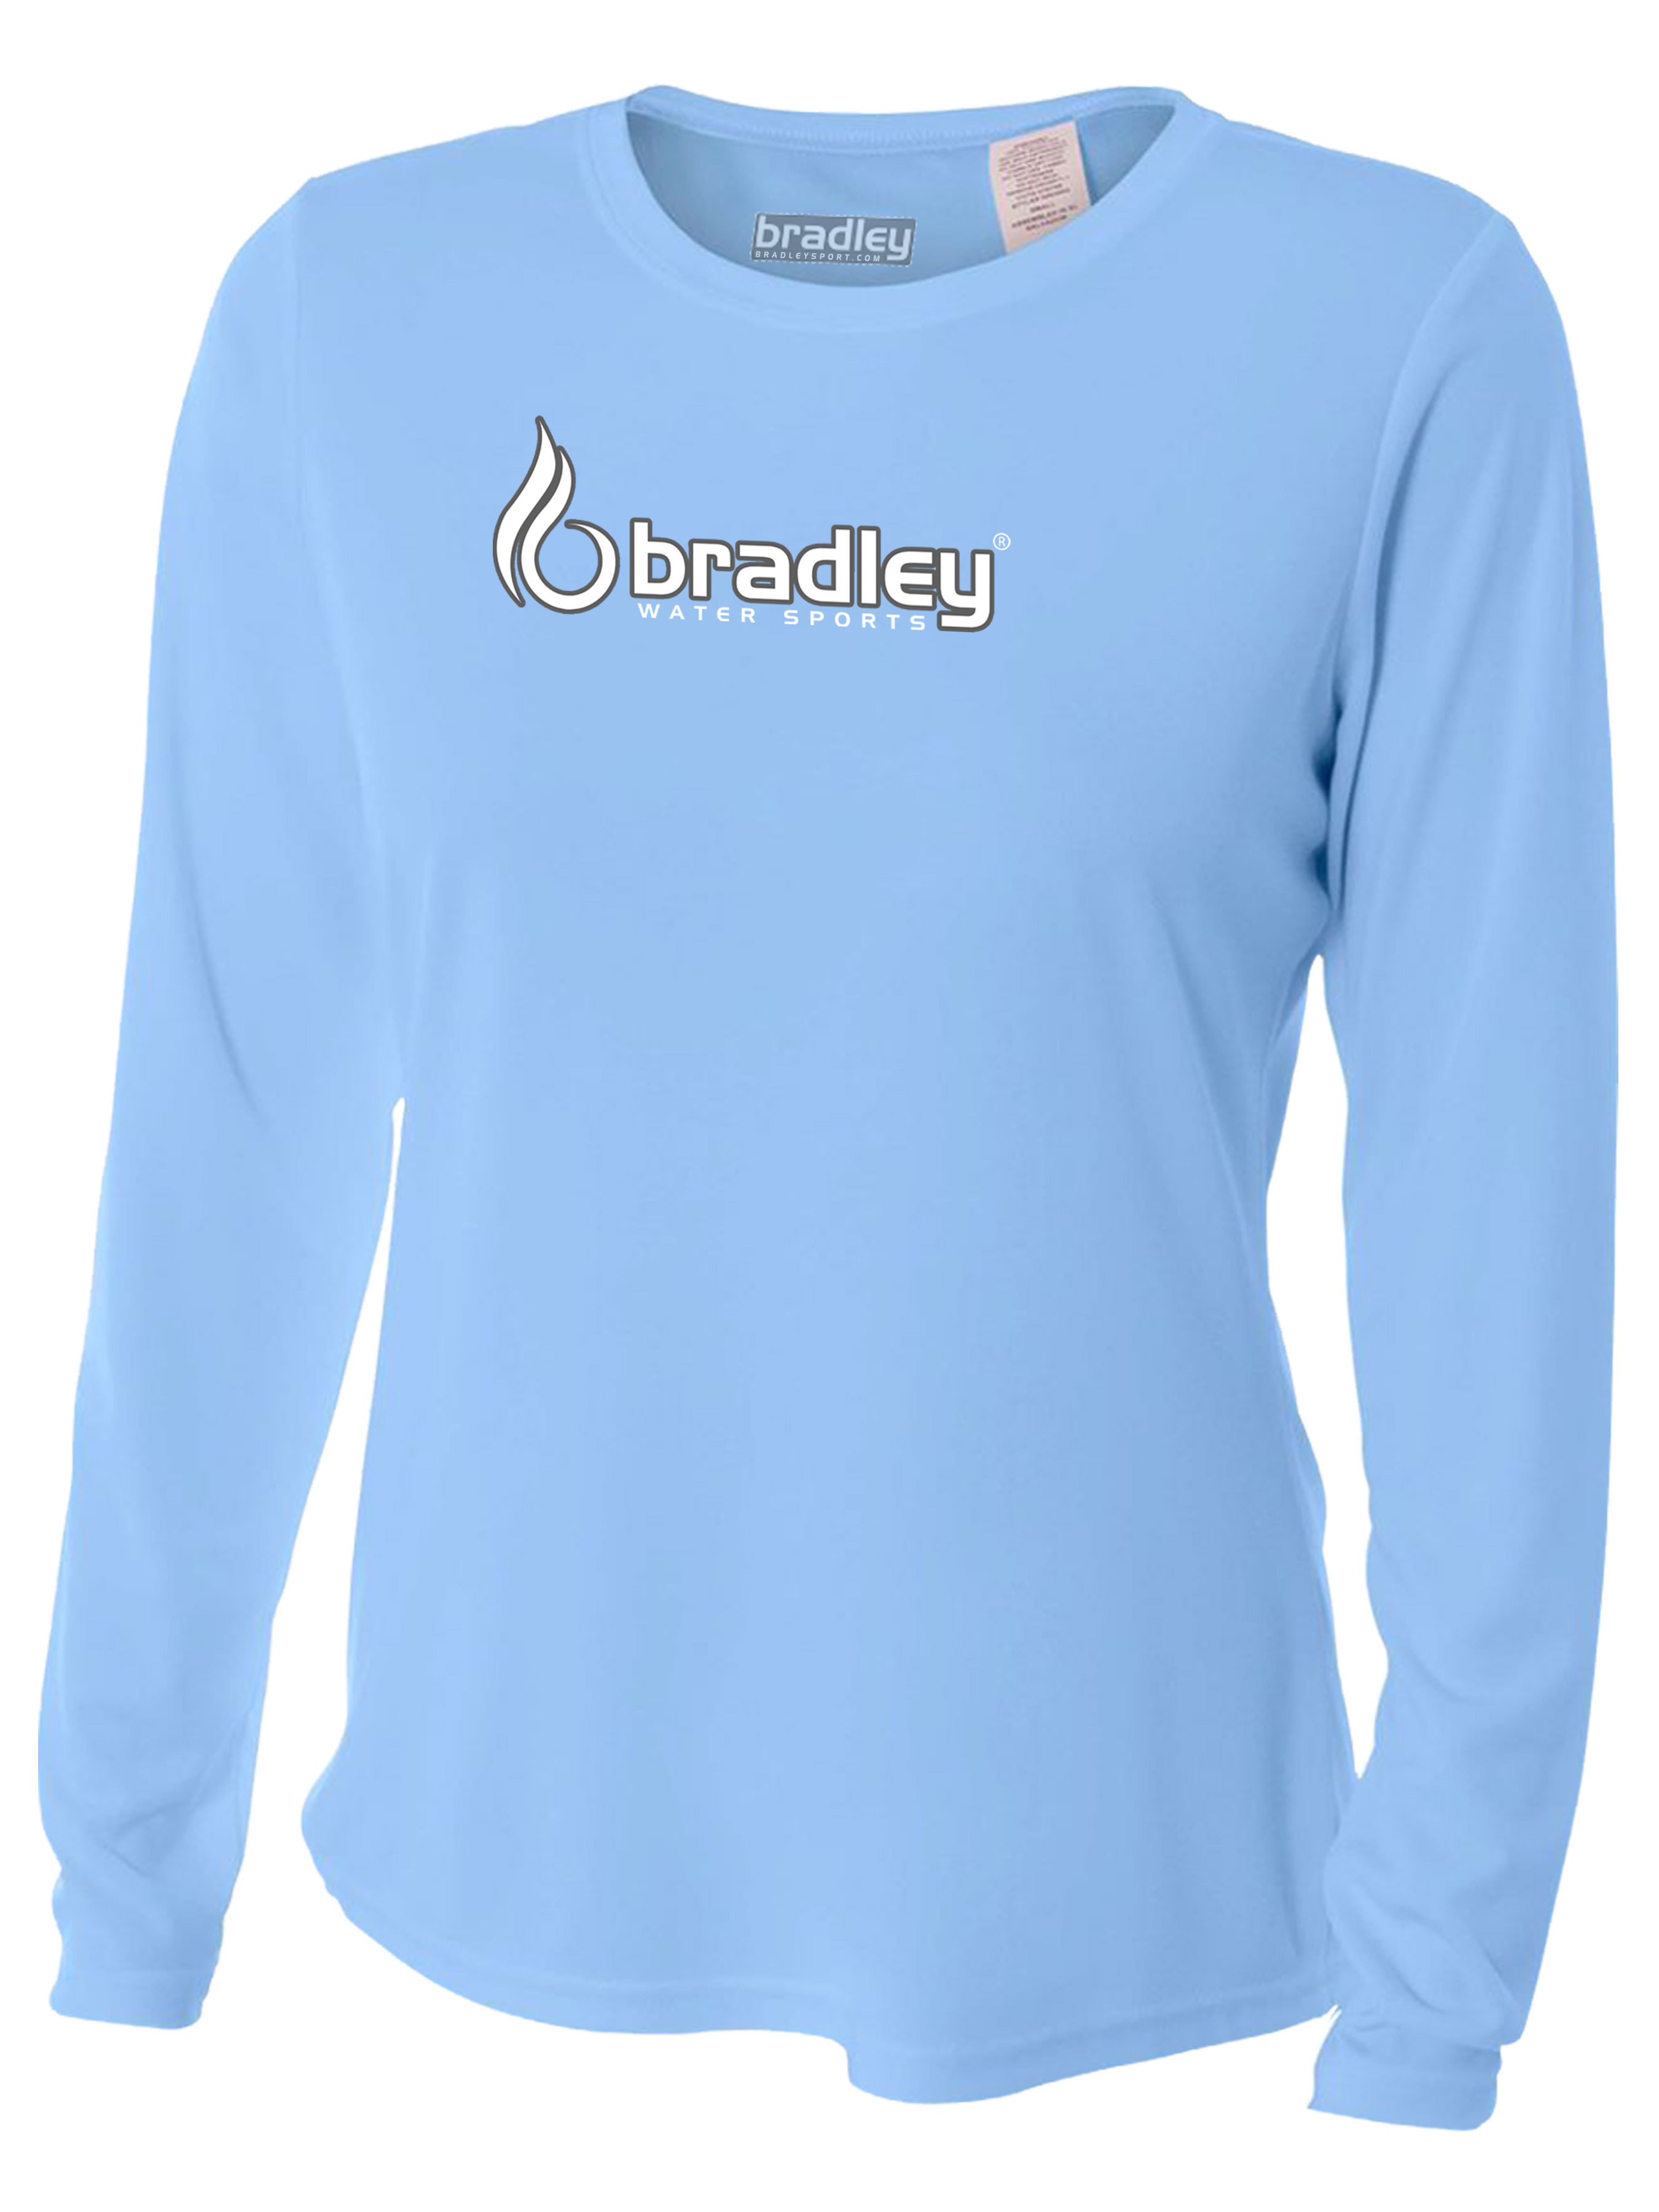 Bradley Women's Casual Fit Long Sleeve Rash Guard Swim Shirt with UV Protection - image 1 of 2